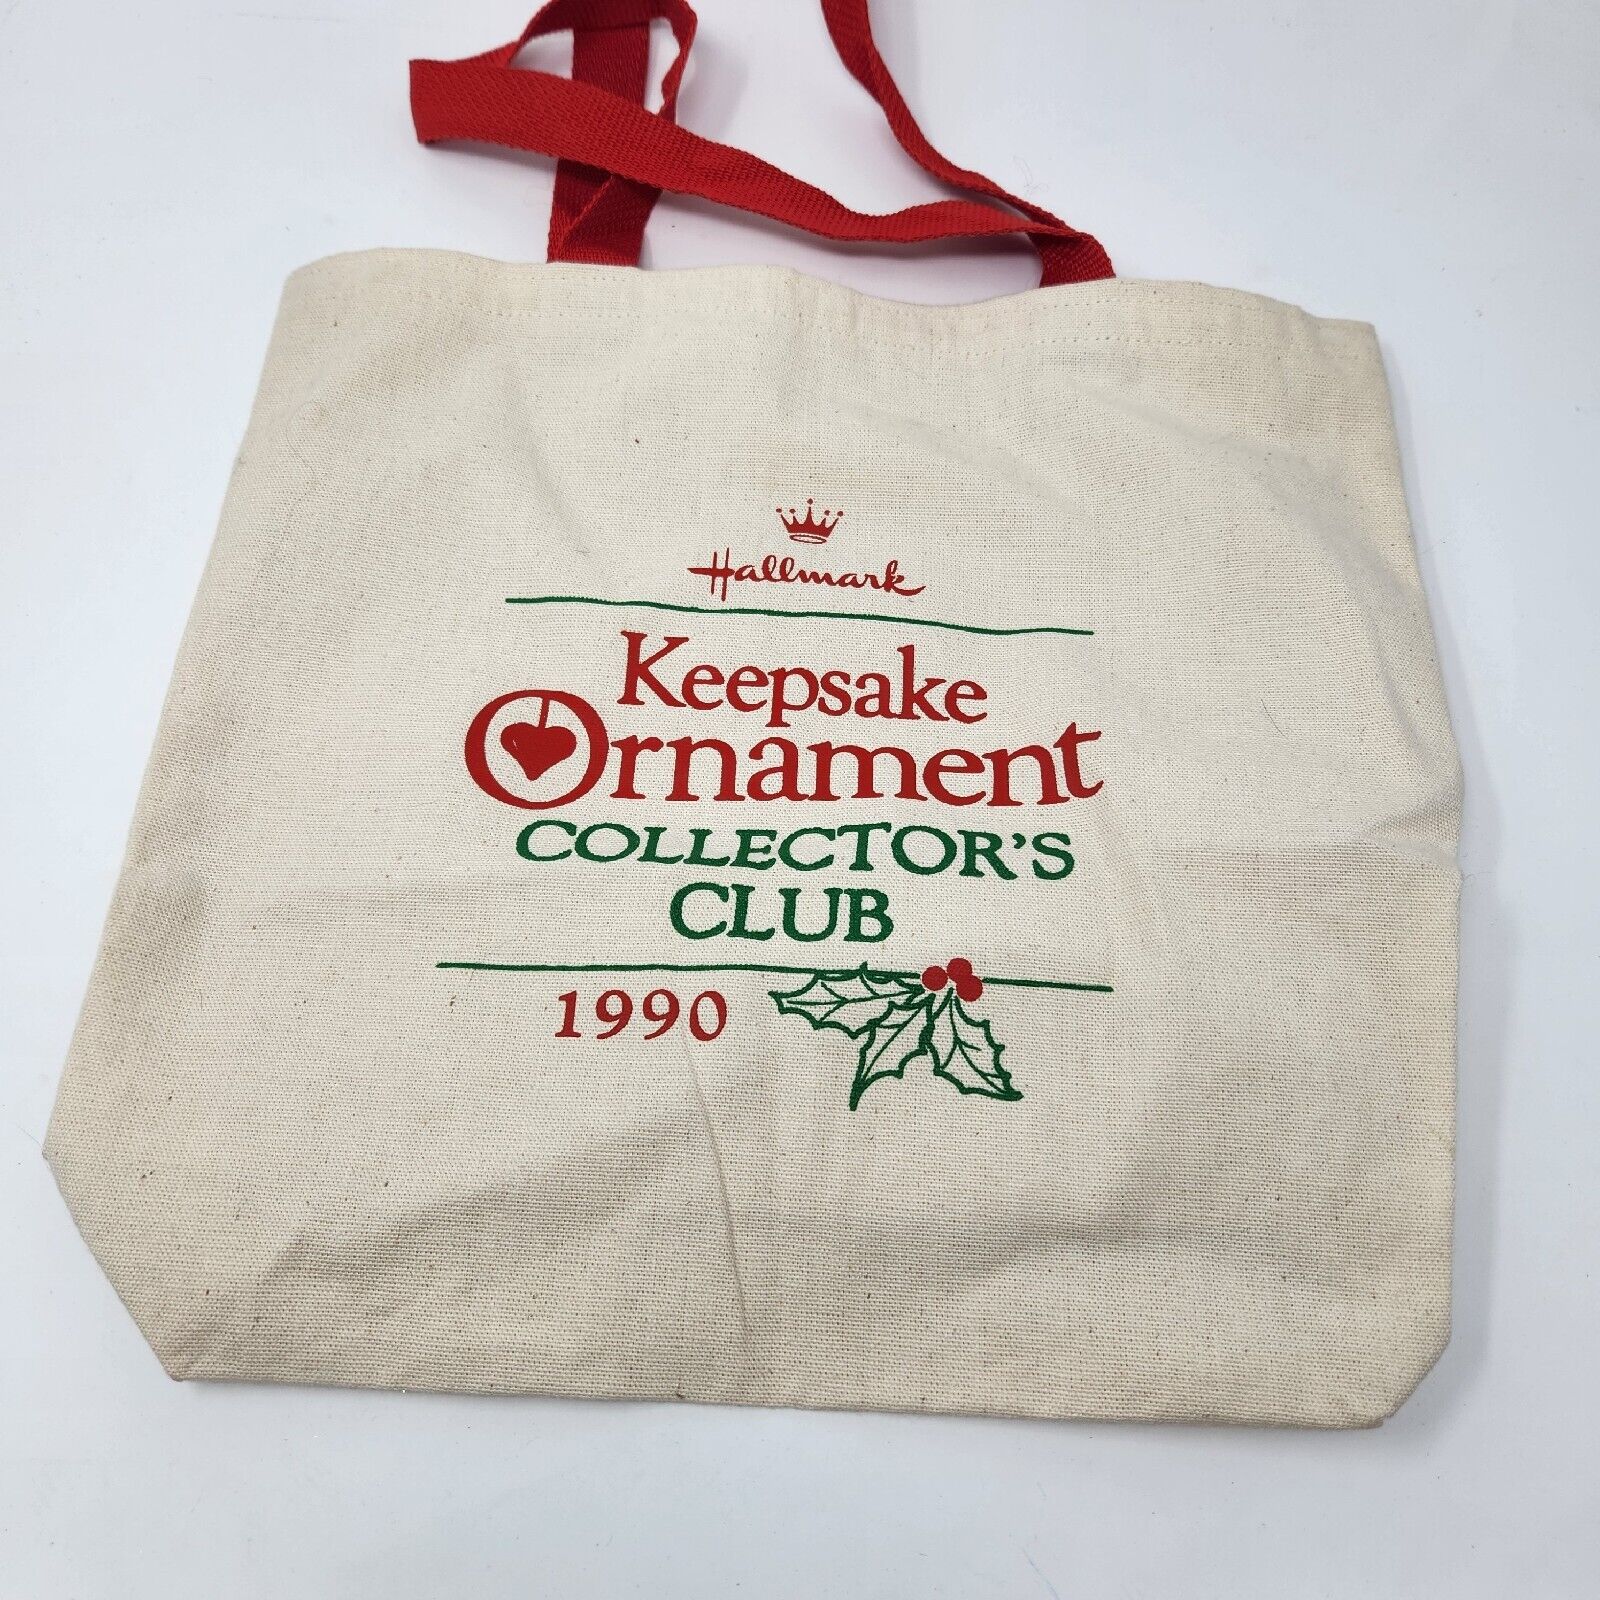 VTG Hallmark Keepsake Ornament Collector's Club Tote Bag 1990 A1